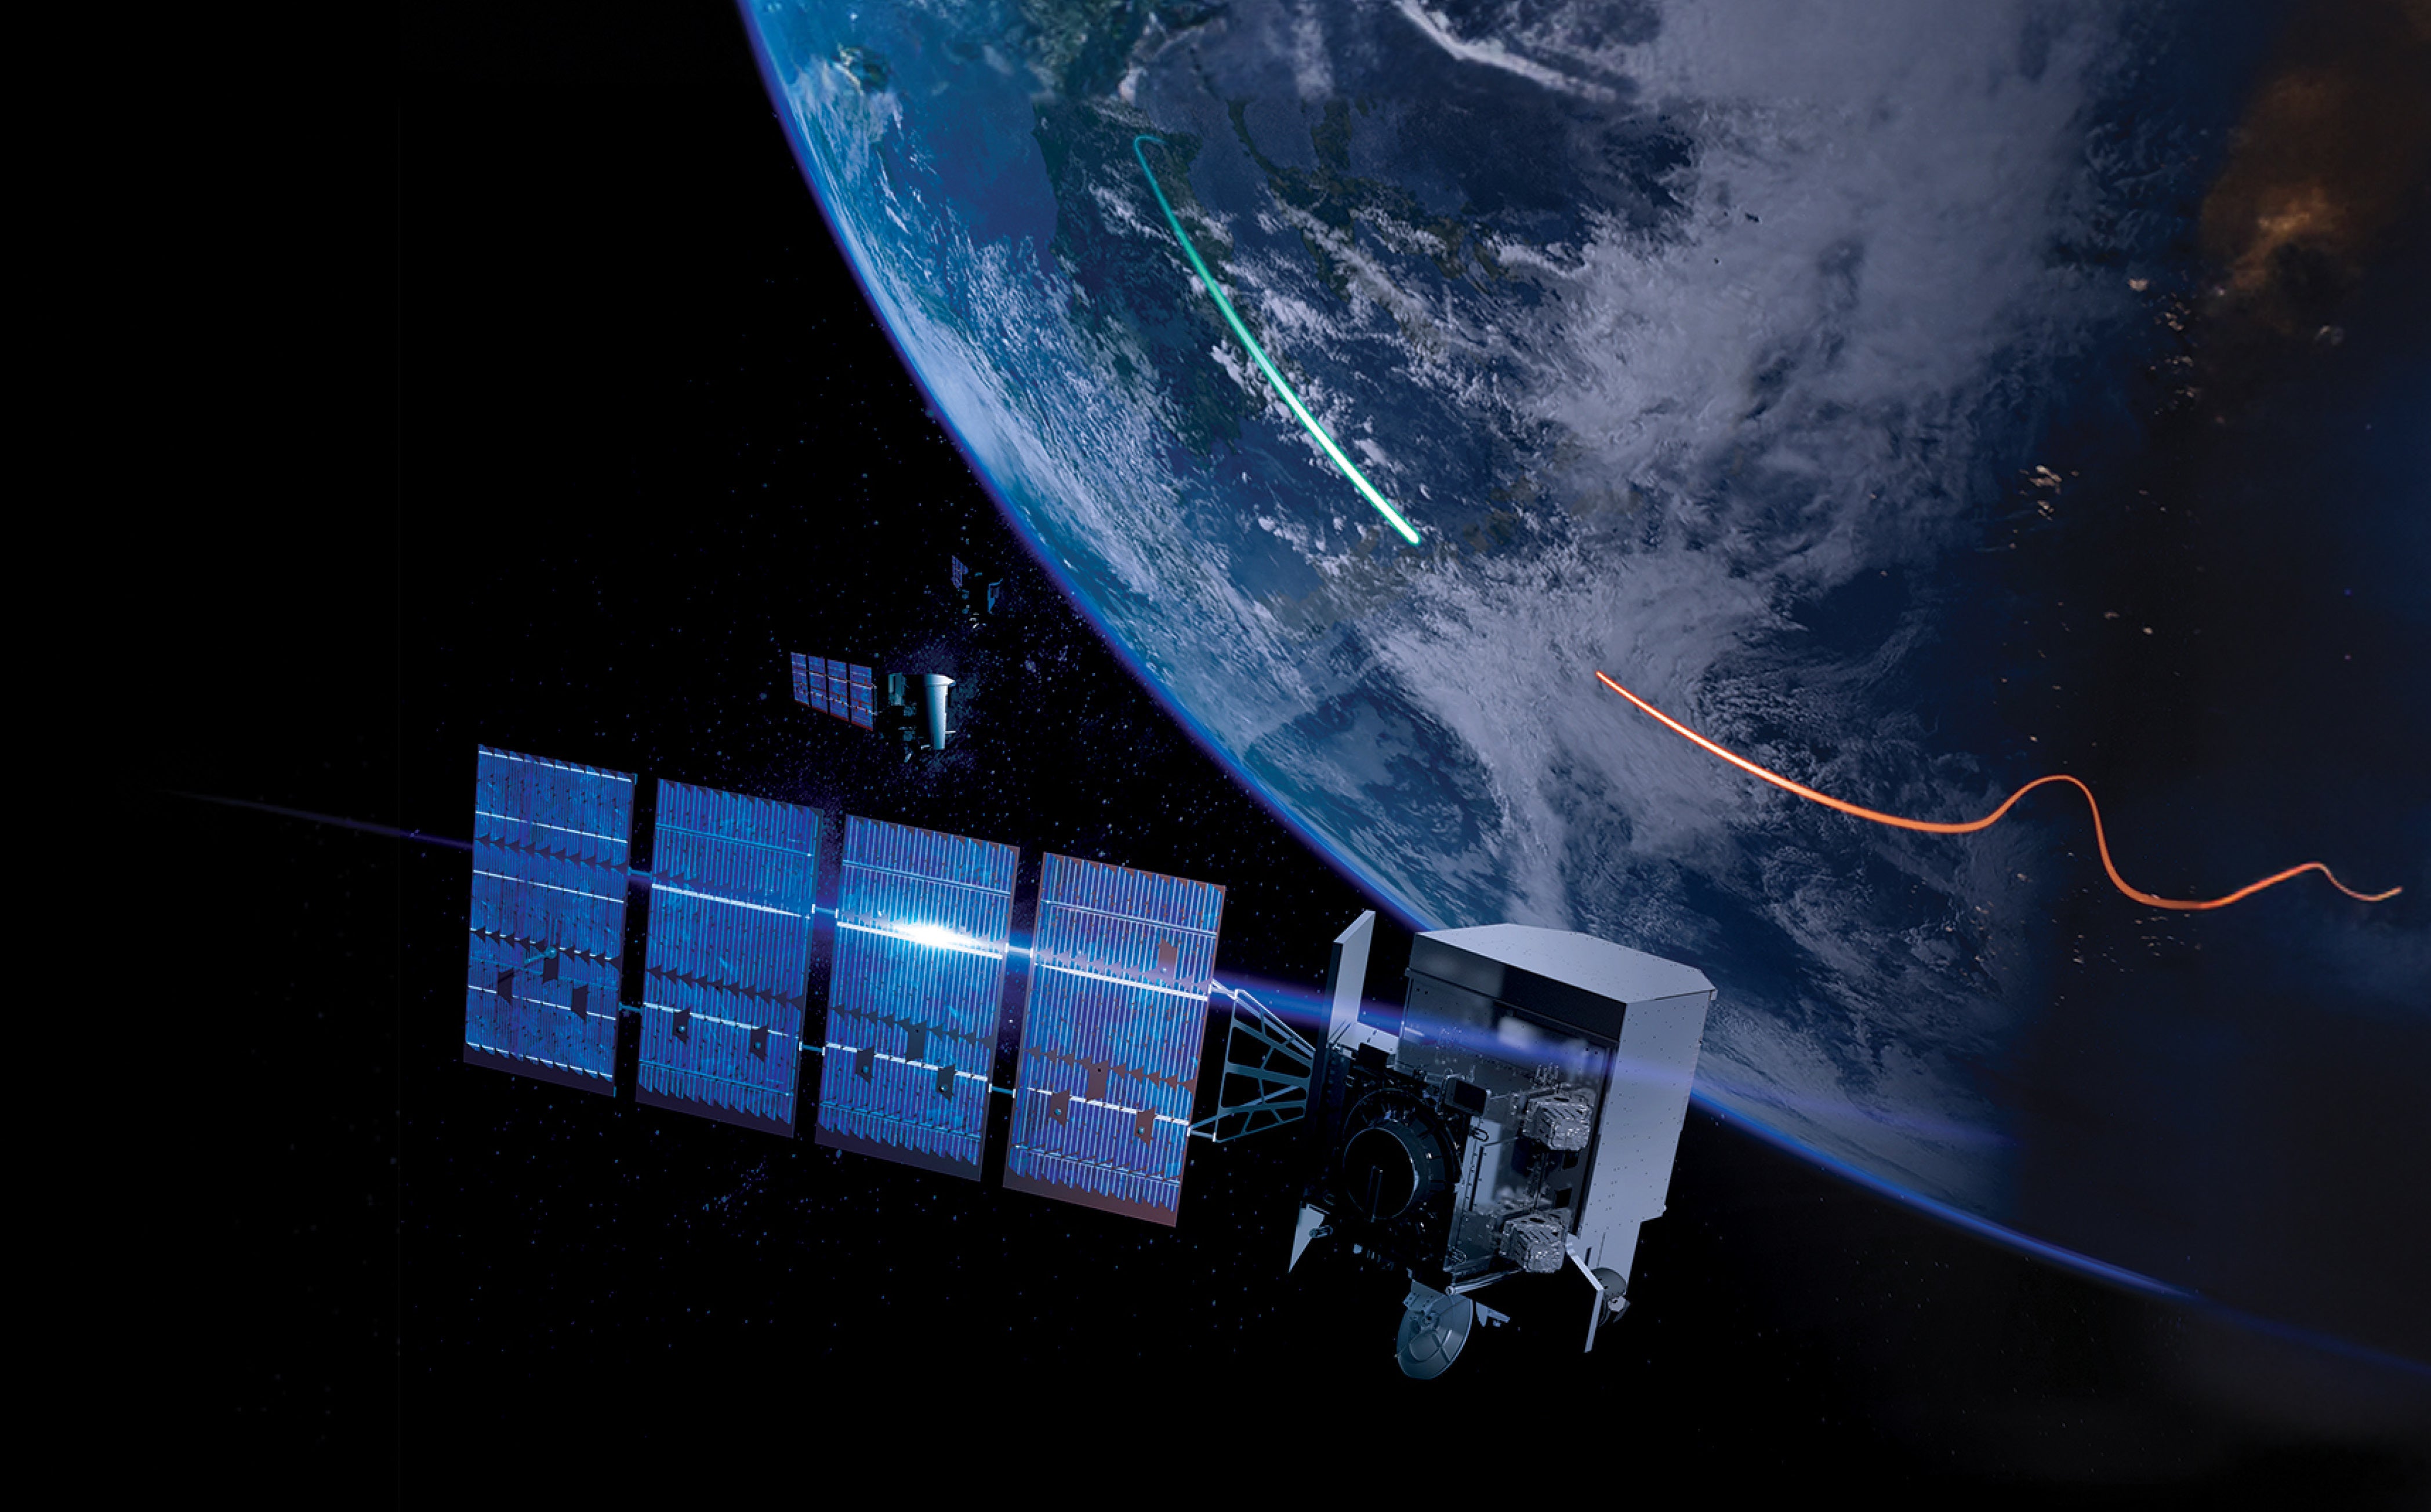 A satellite tracks missiles on earth